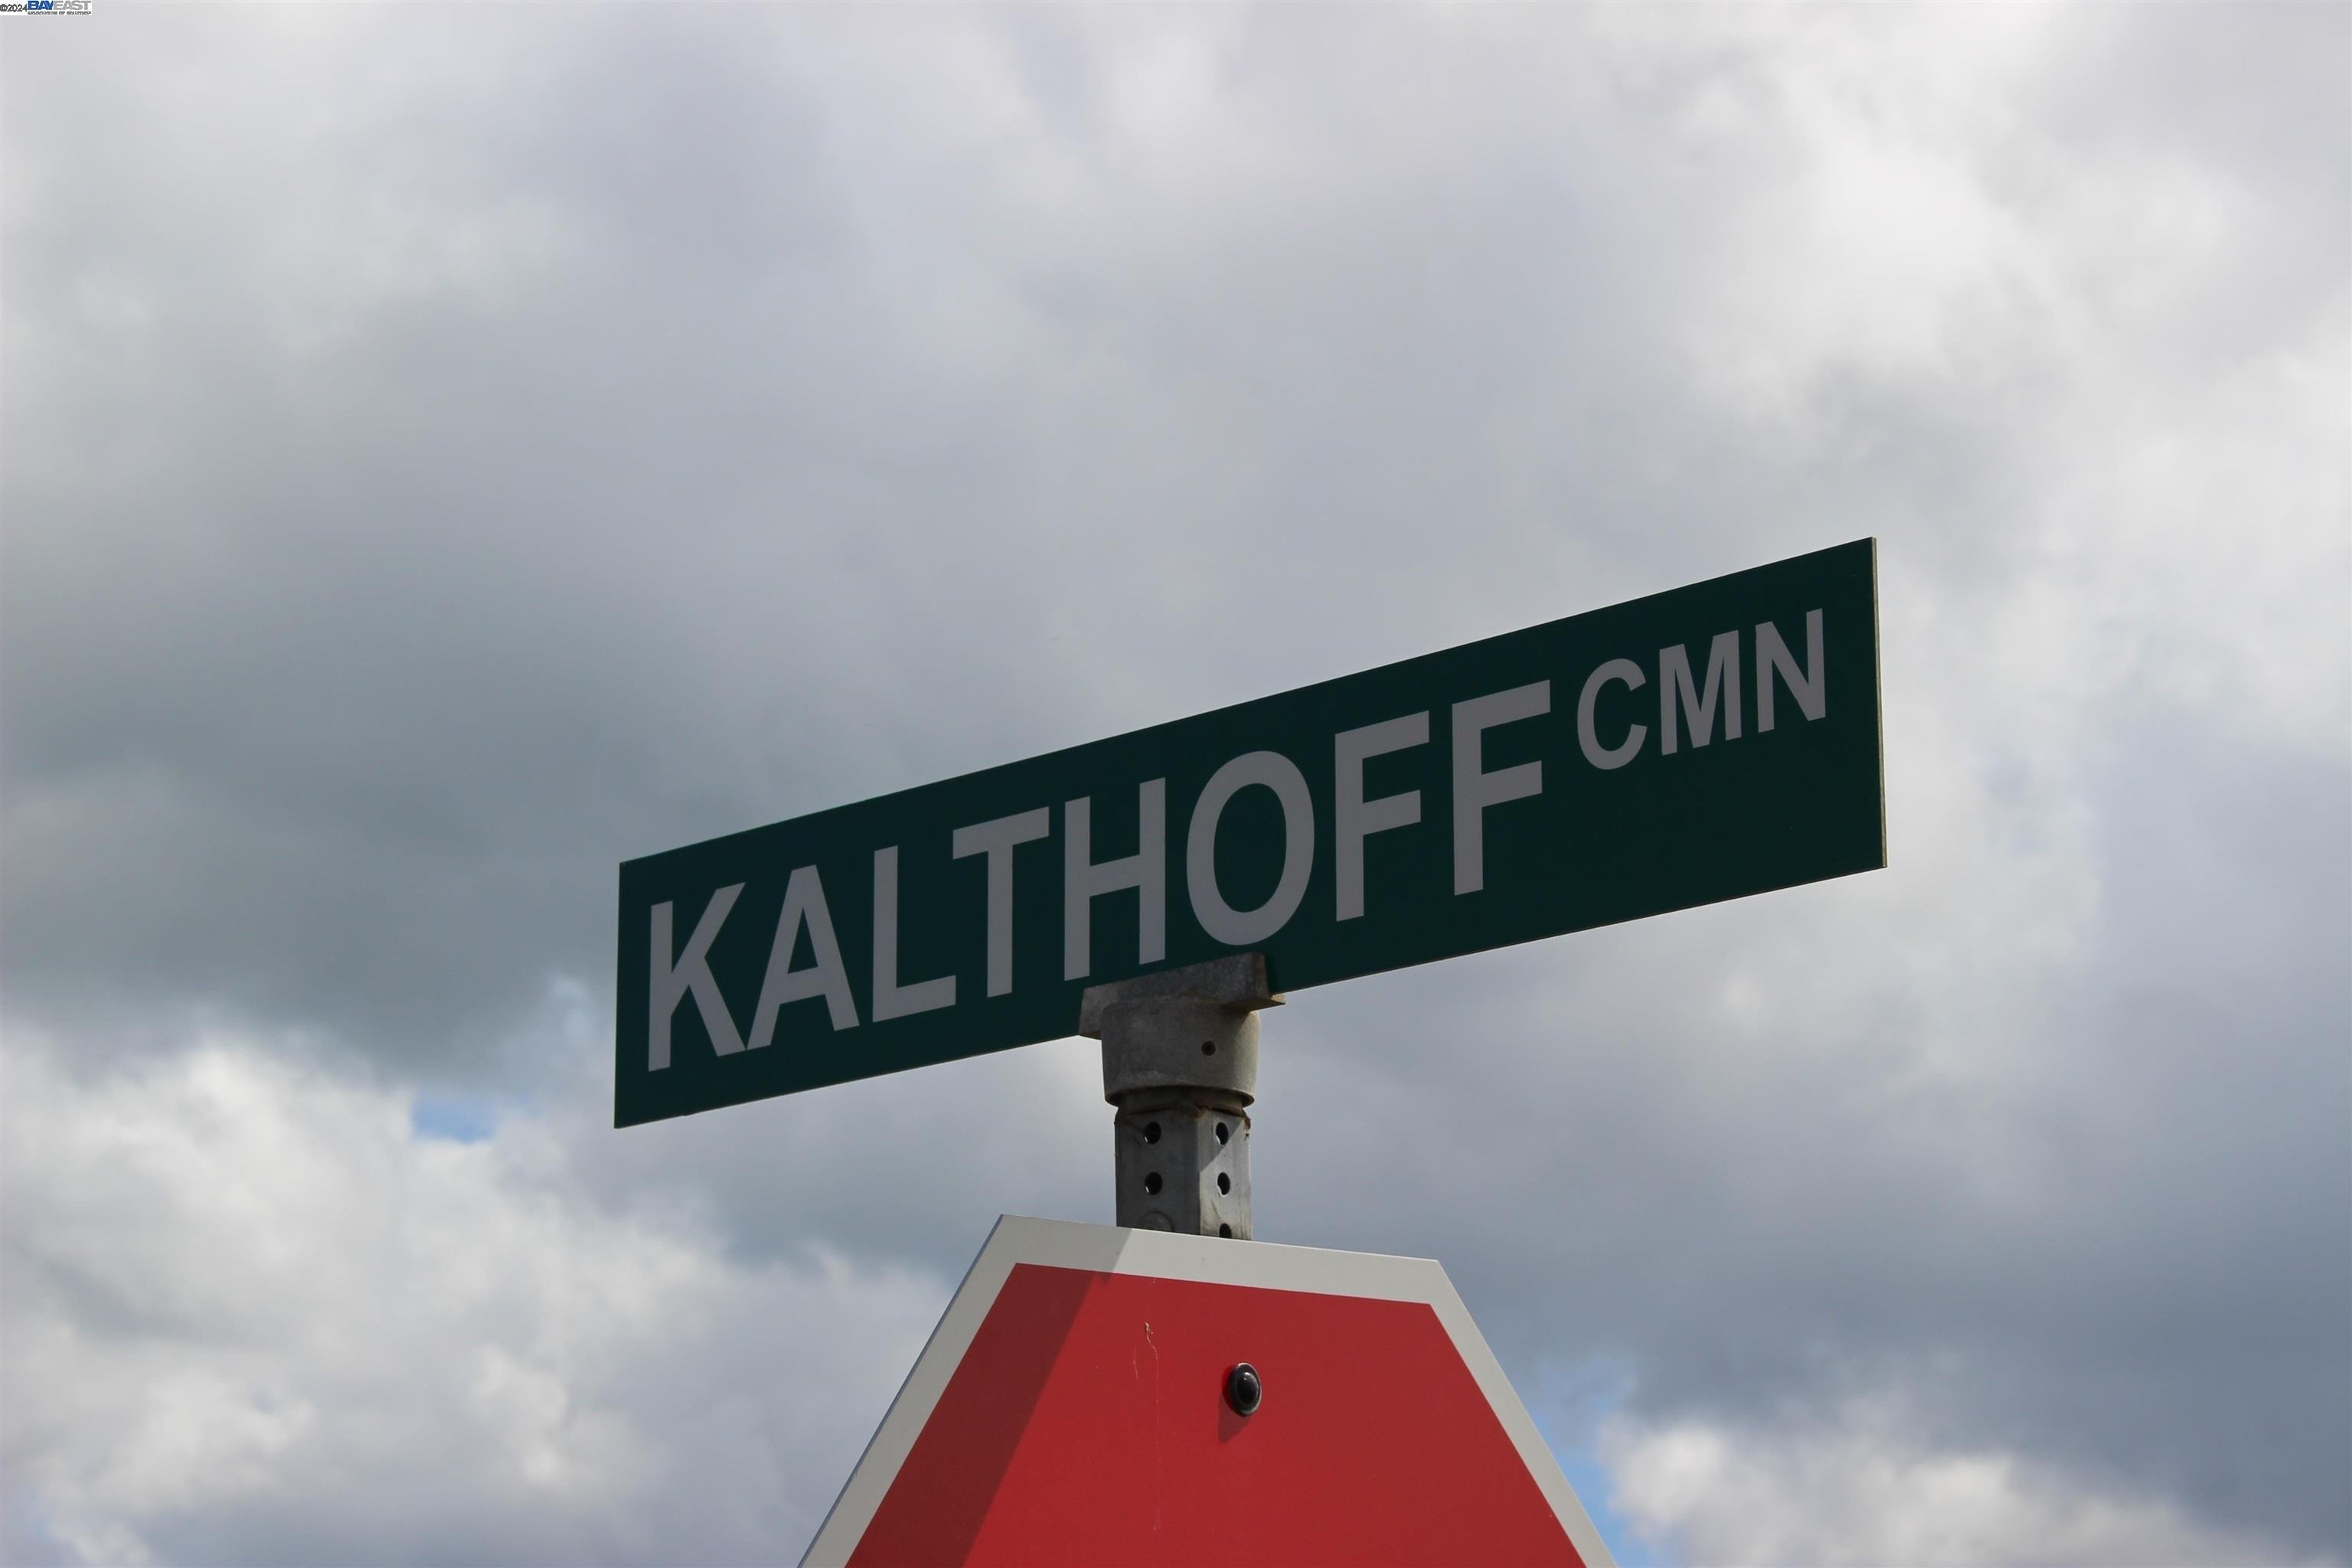 1. 727 Kalthoff Common